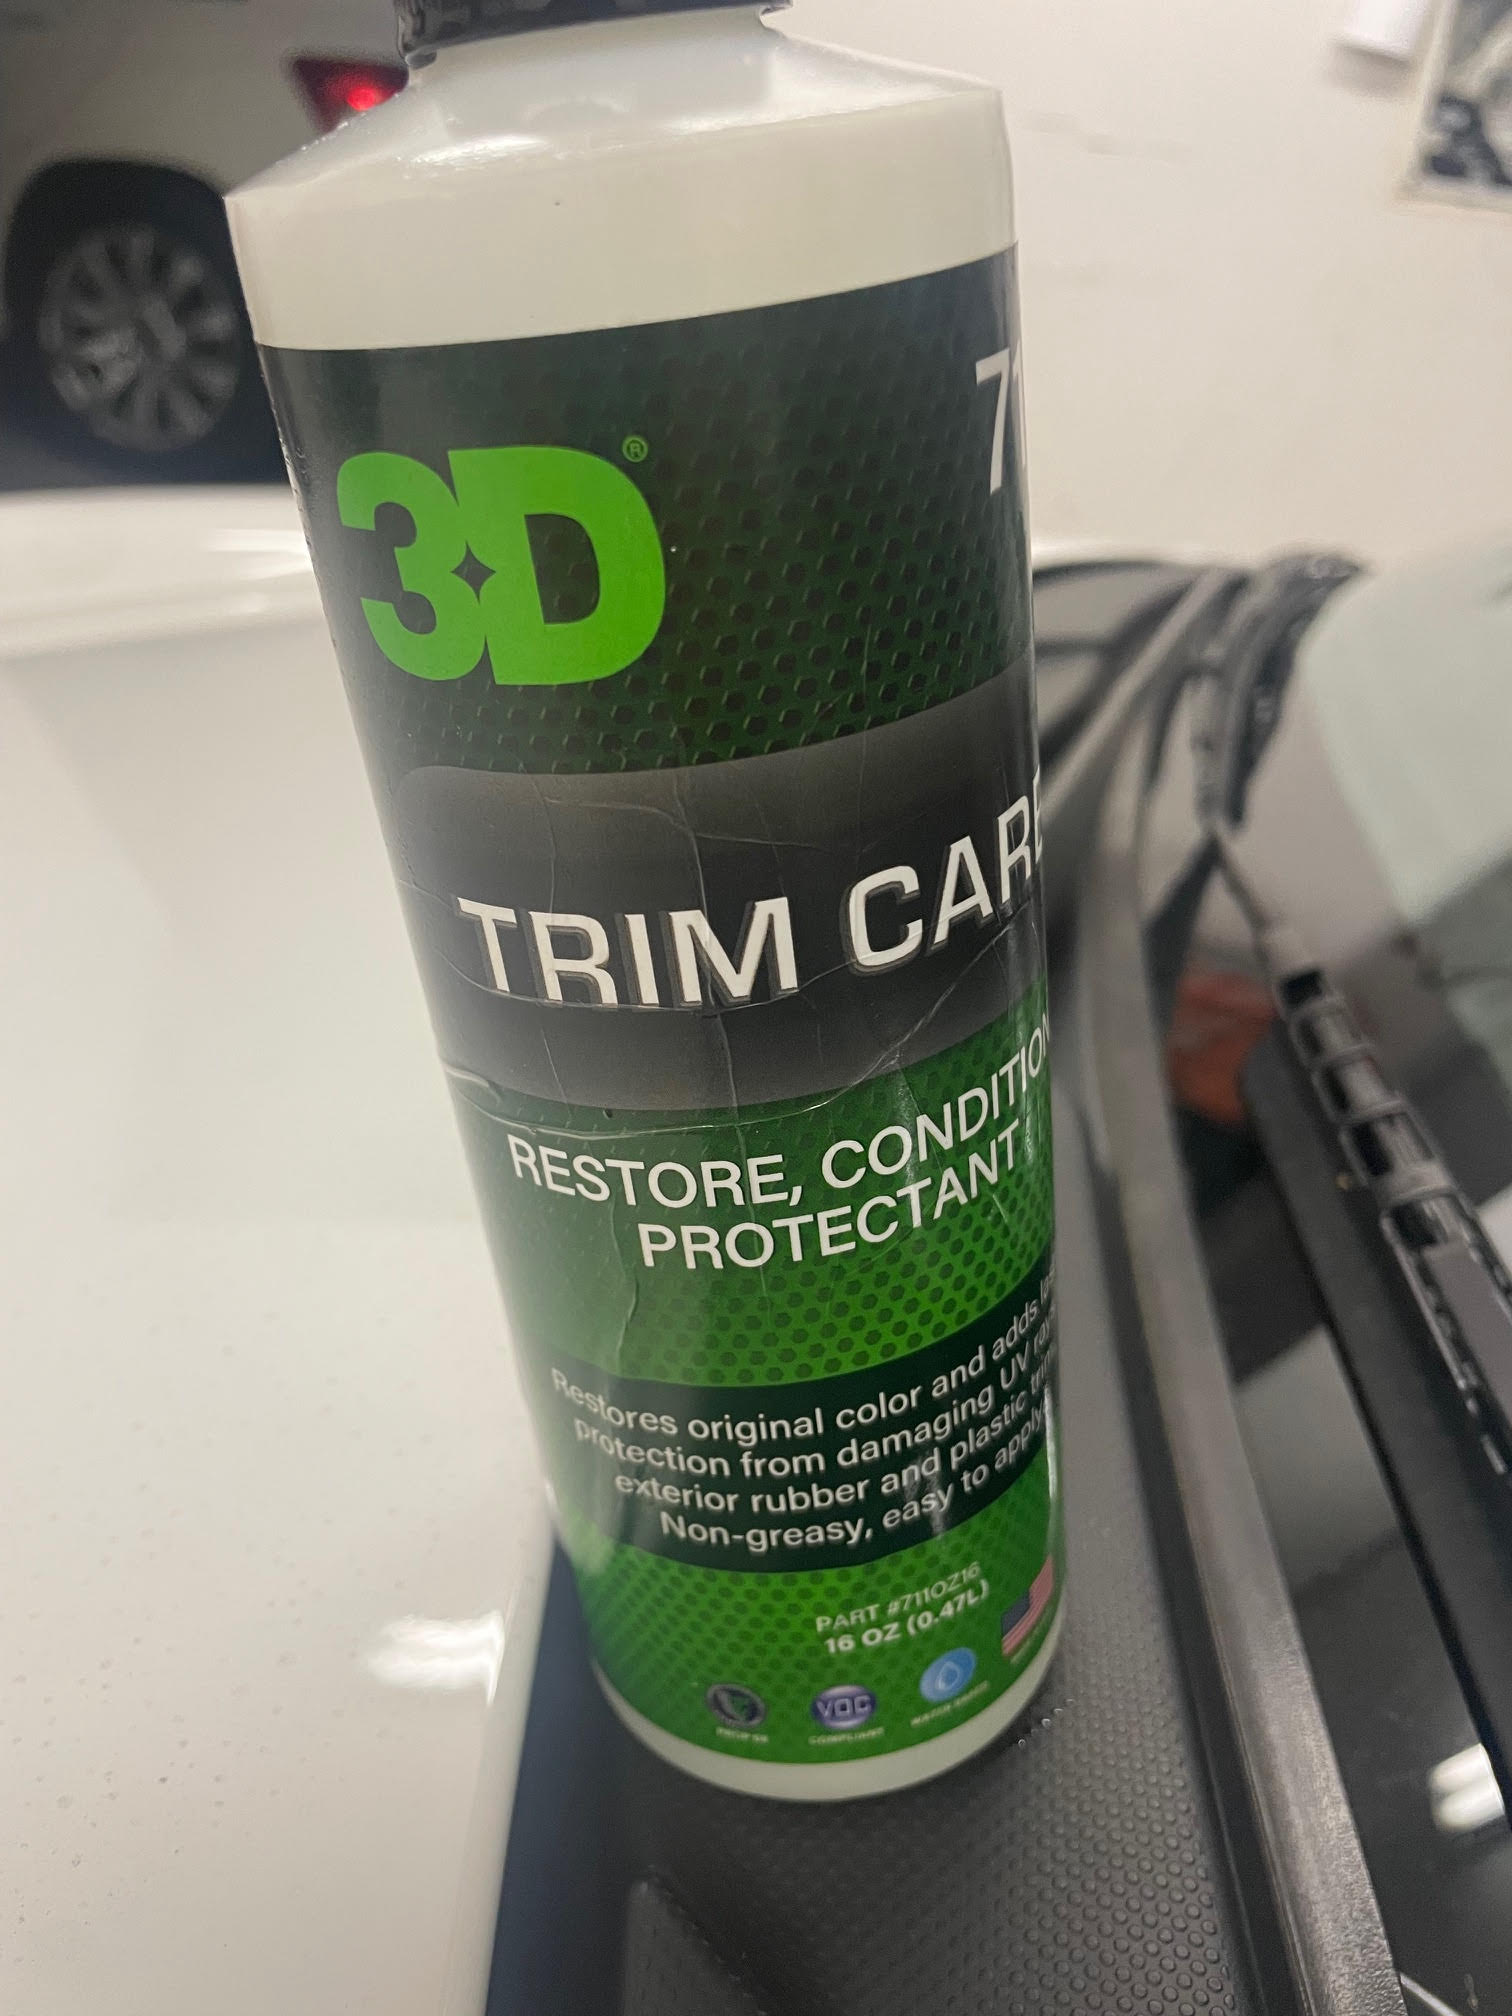 Best Plastic Car Trim Restorer? 303 Protect vs Mothers, Turtle Wax